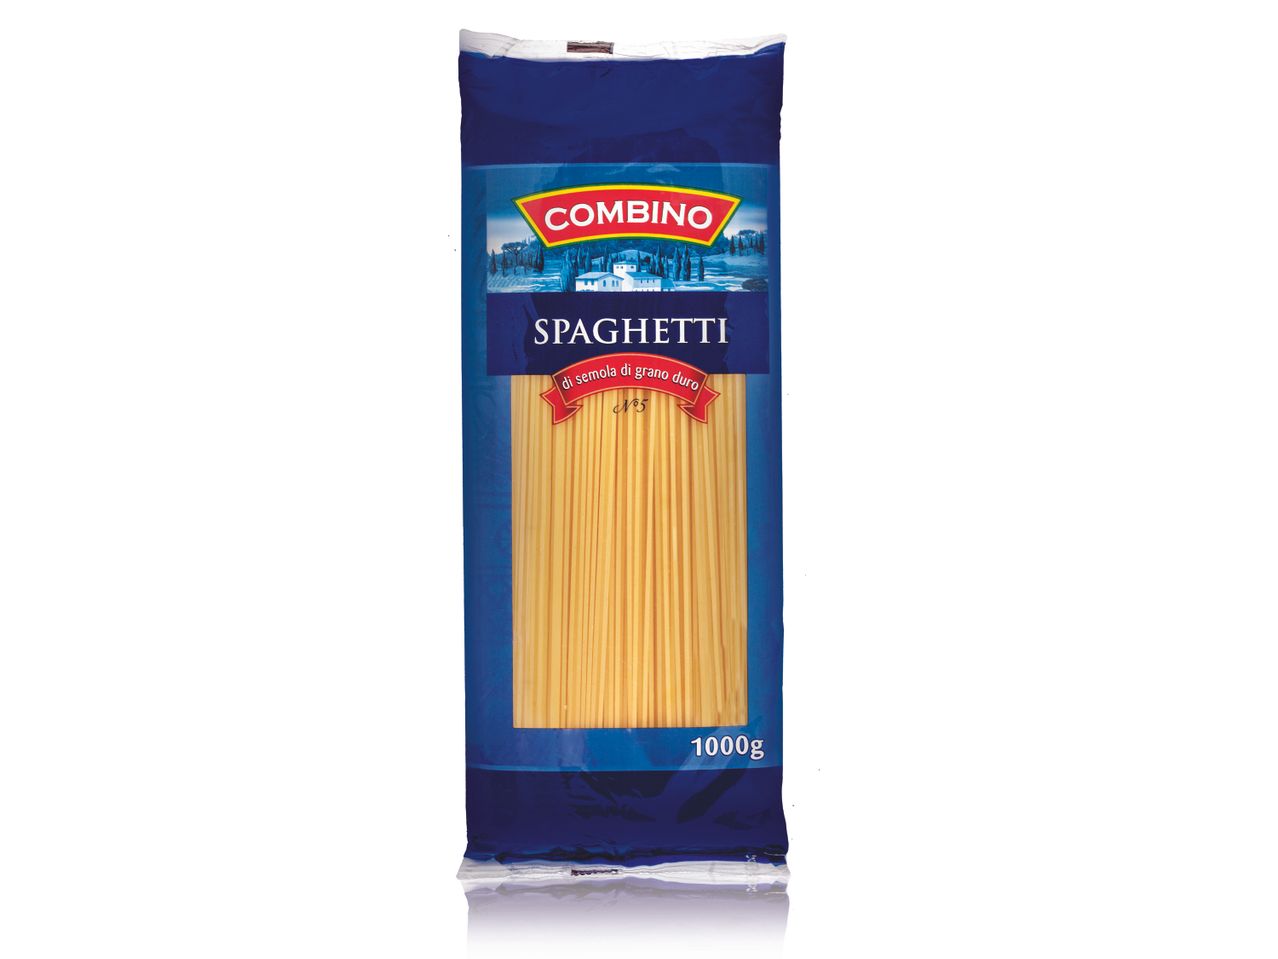 Go to full screen view: Spaghetti - Image 1